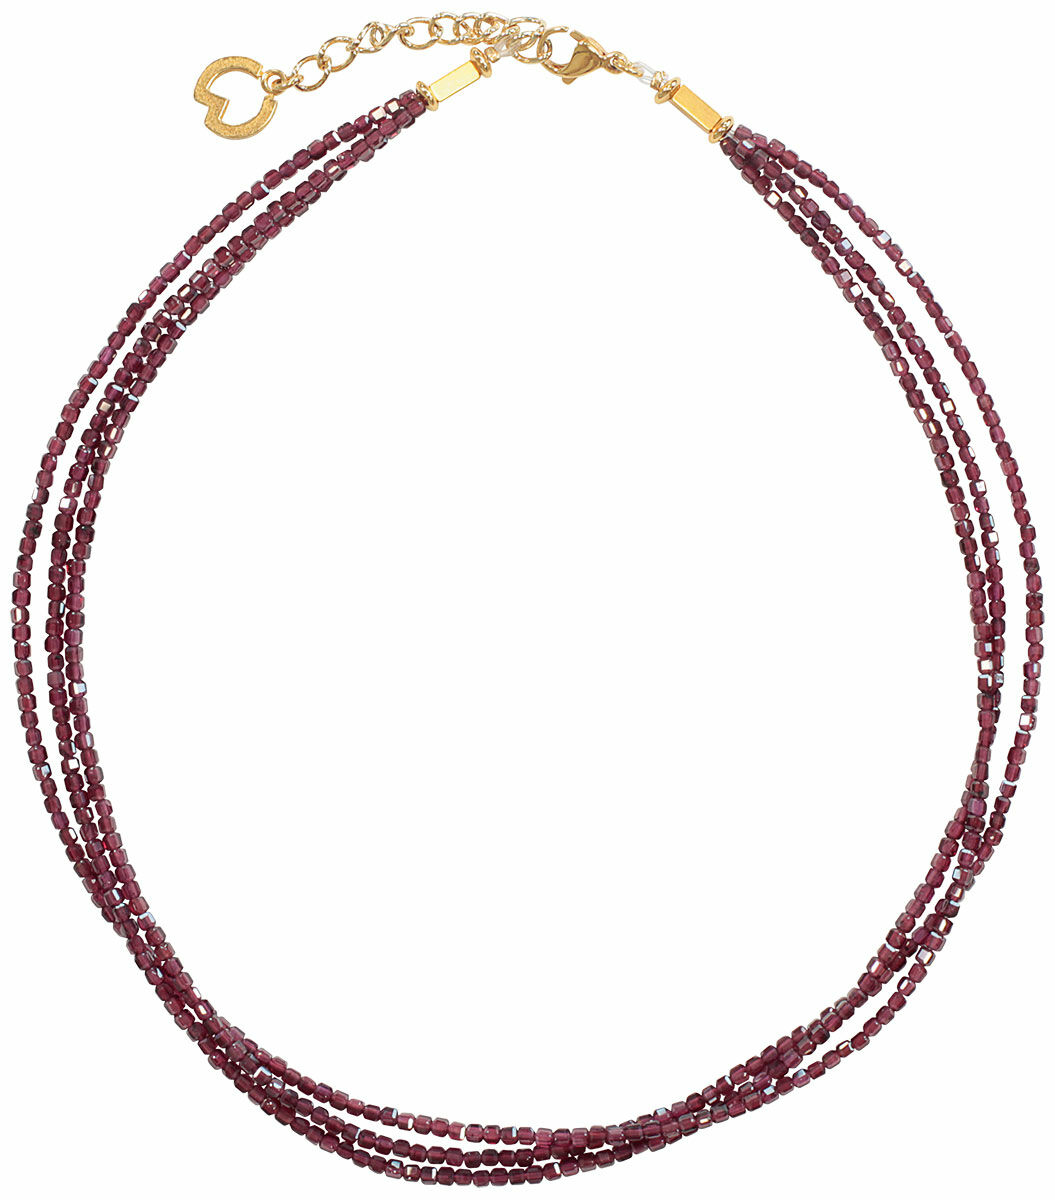 Necklace "Garnet" by Petra Waszak